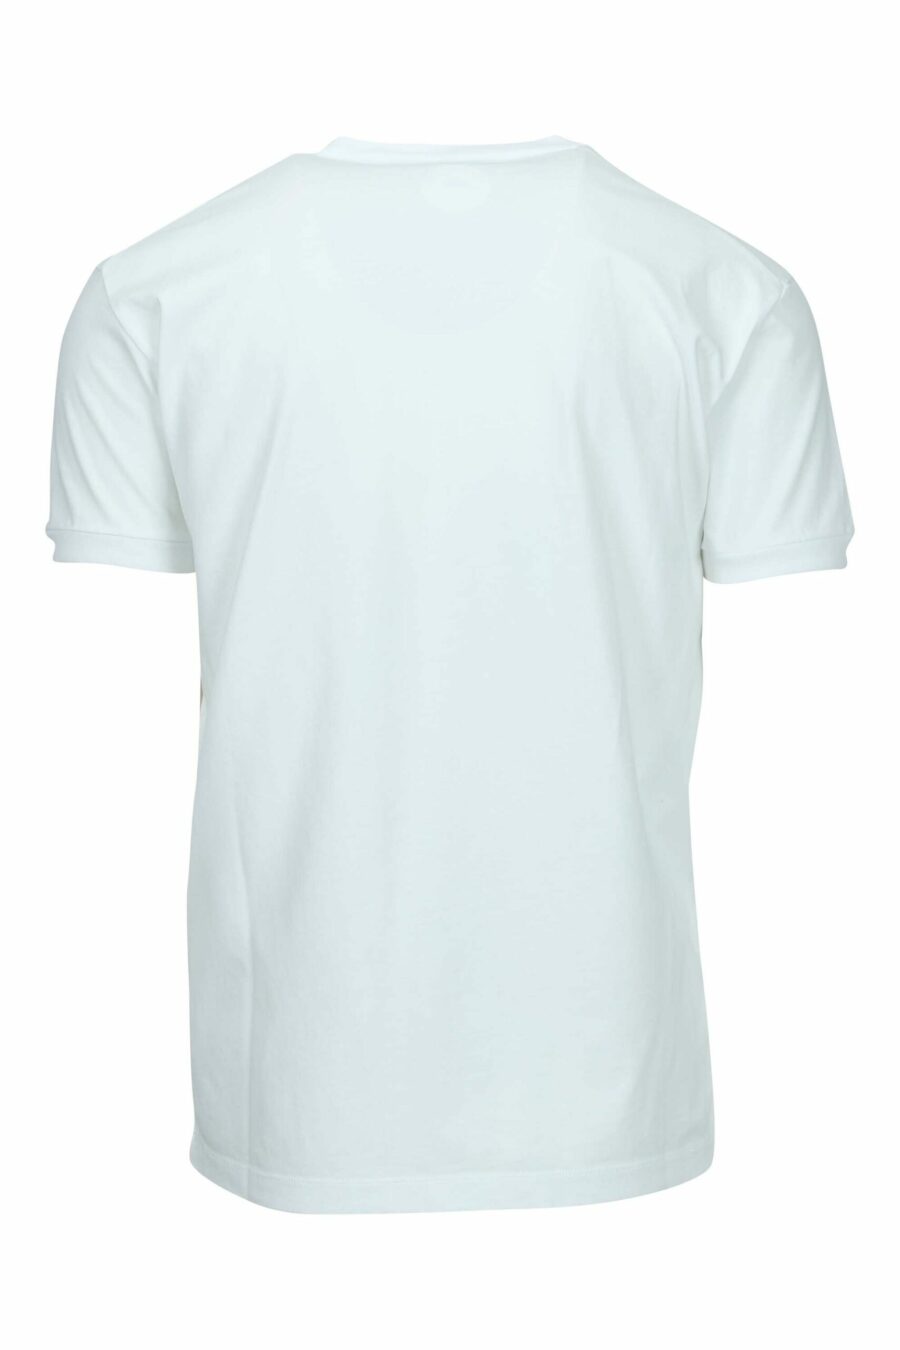 Weißes T-Shirt mit mehrfarbigem Graffiti-Maxilogo - 8054148570620 1 skaliert